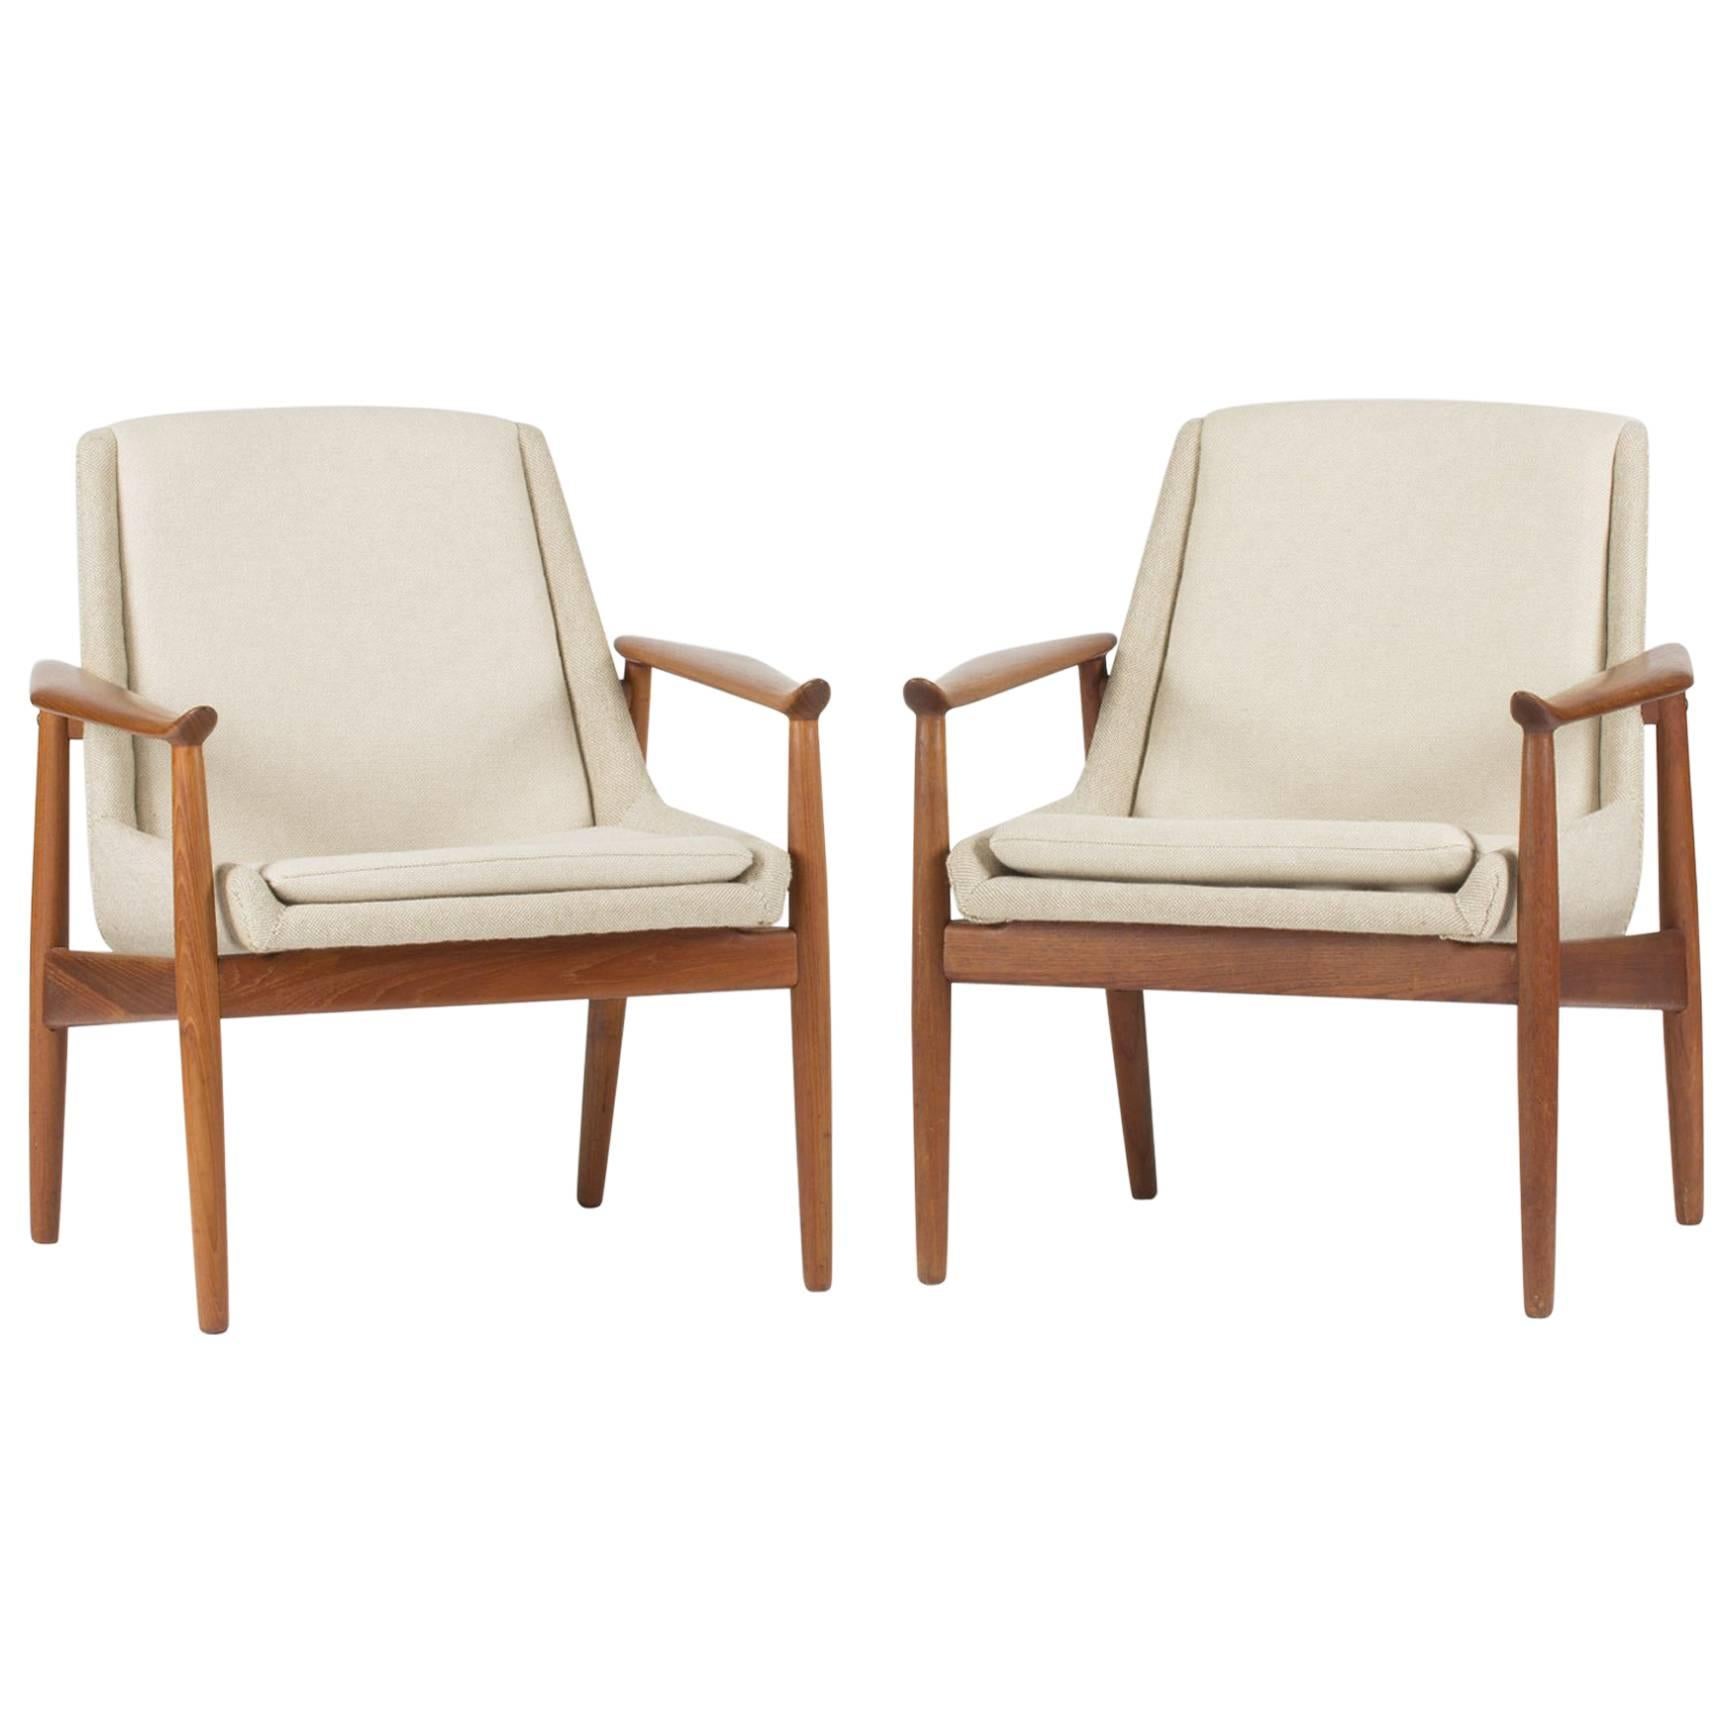 Pair of Teak Lounge Chairs by Arne Vodder